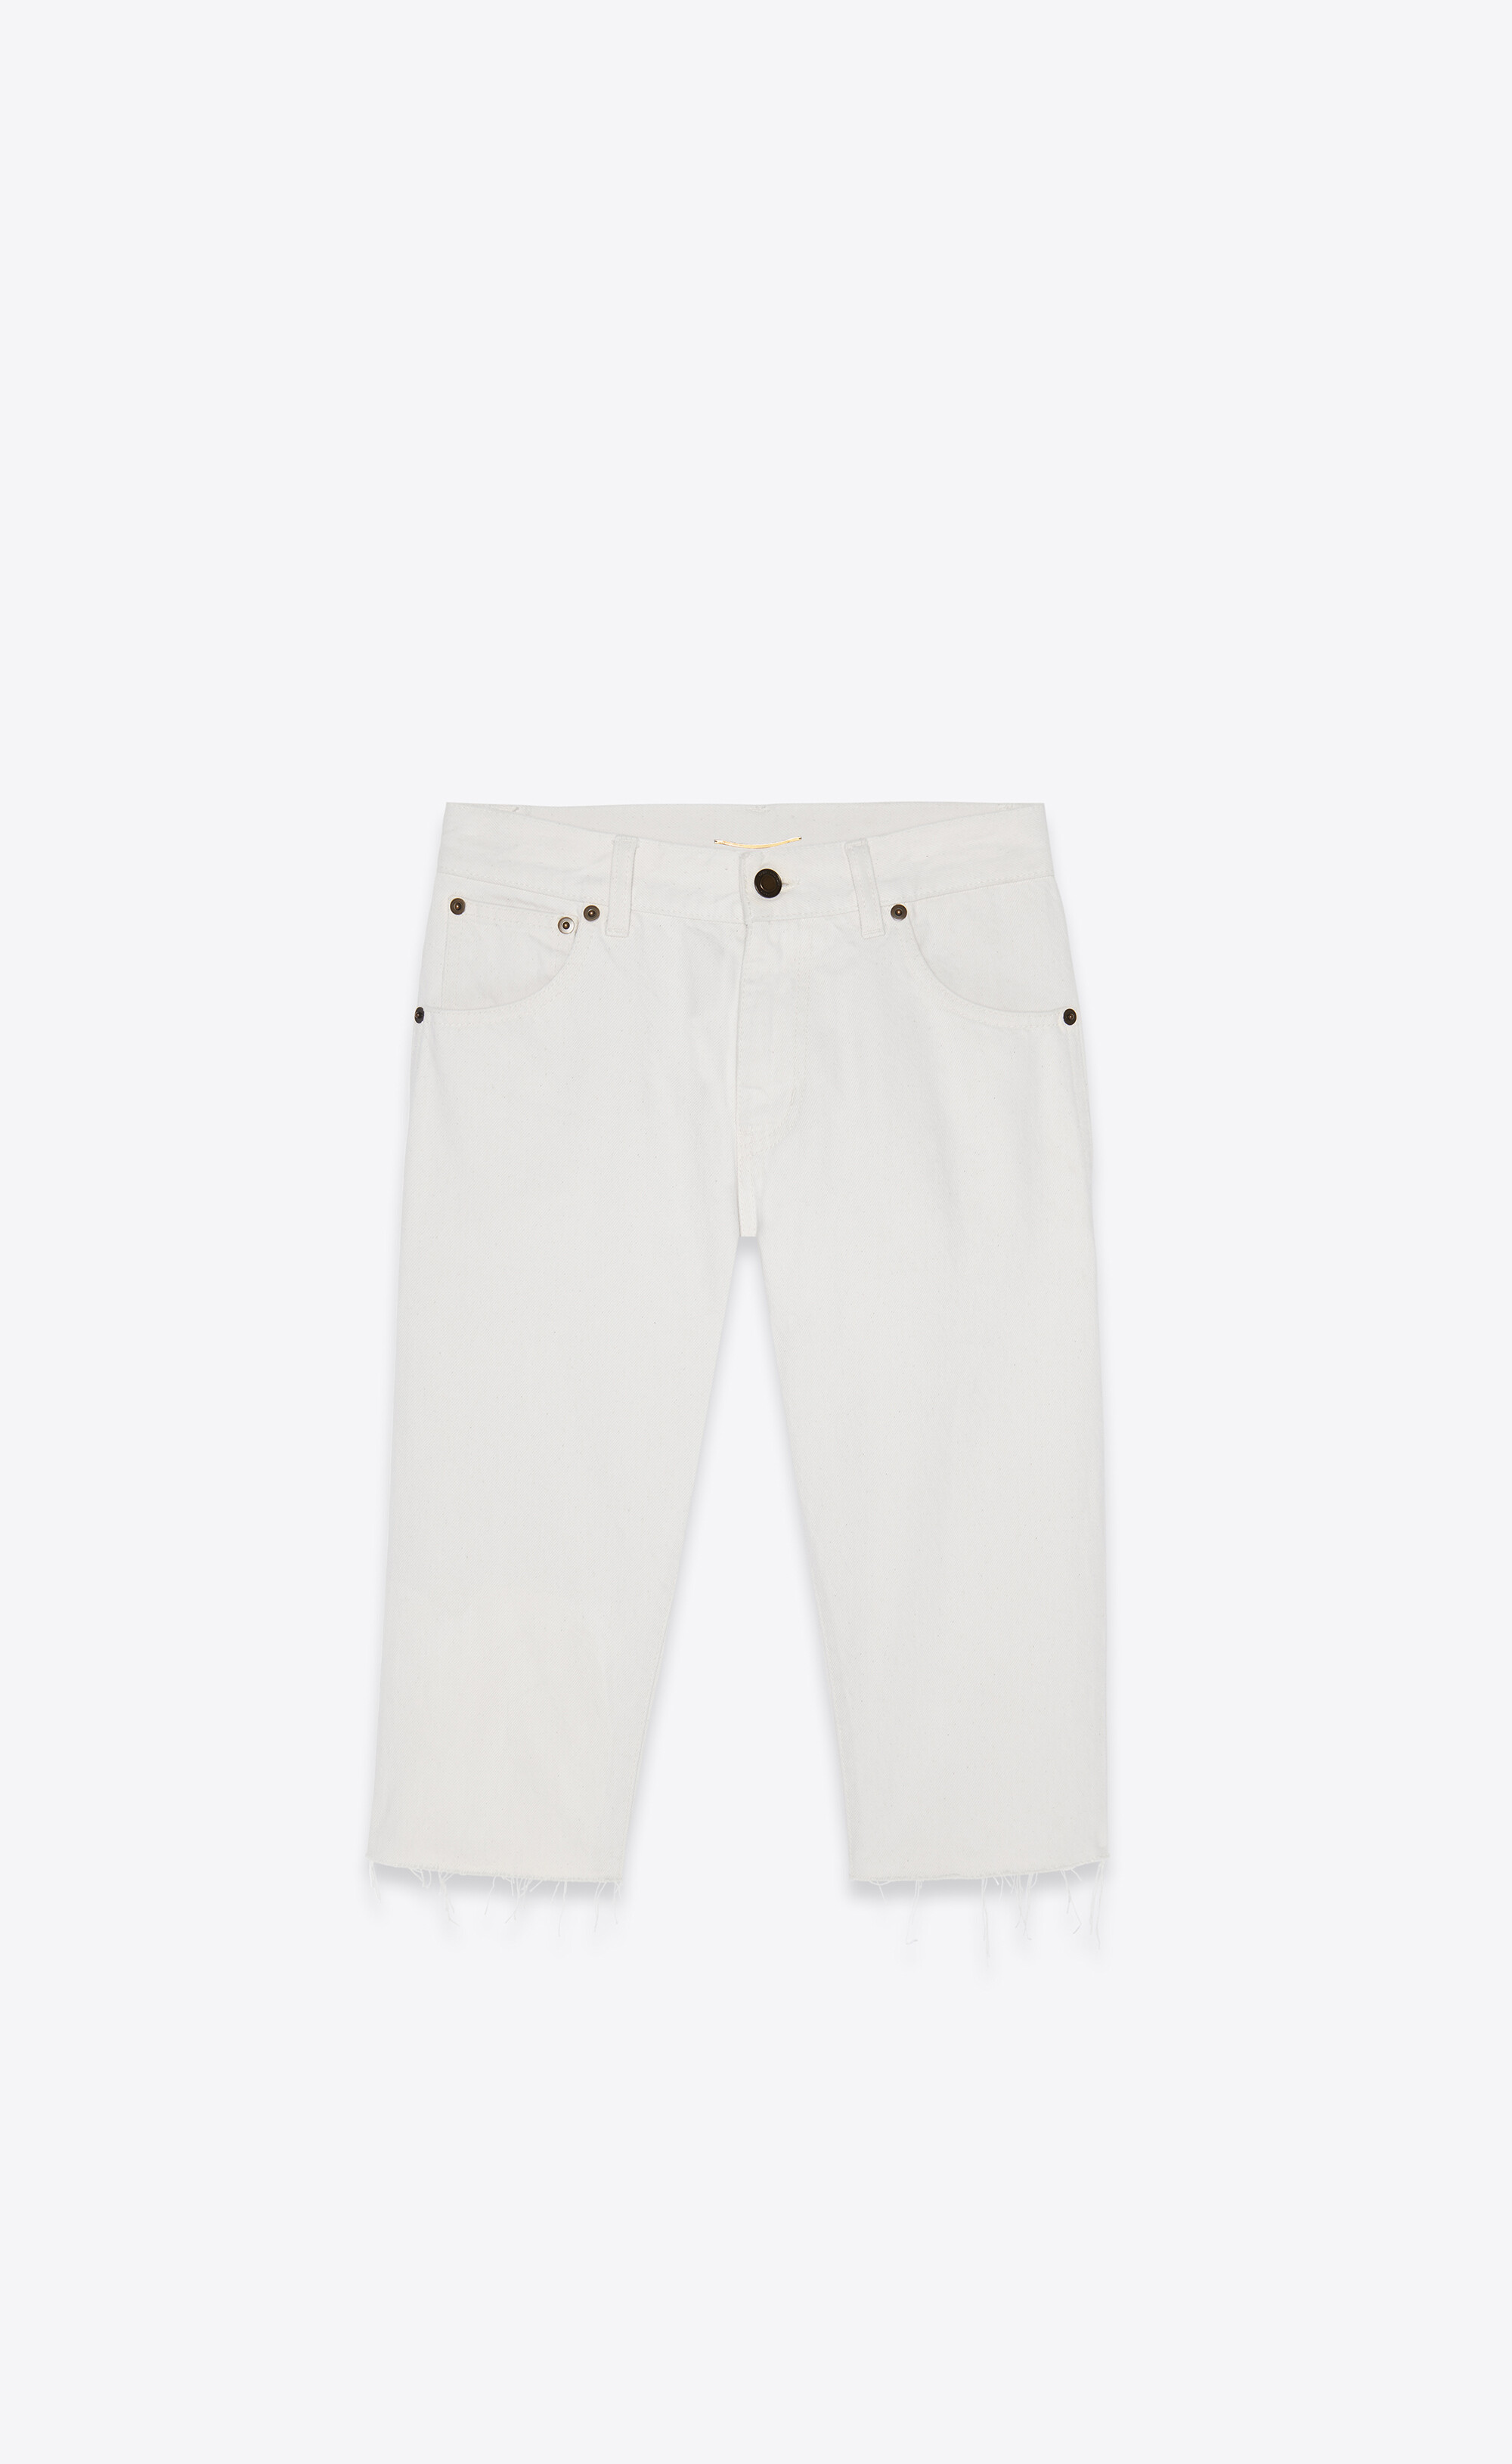 long bermuda shorts in caribbean white denim